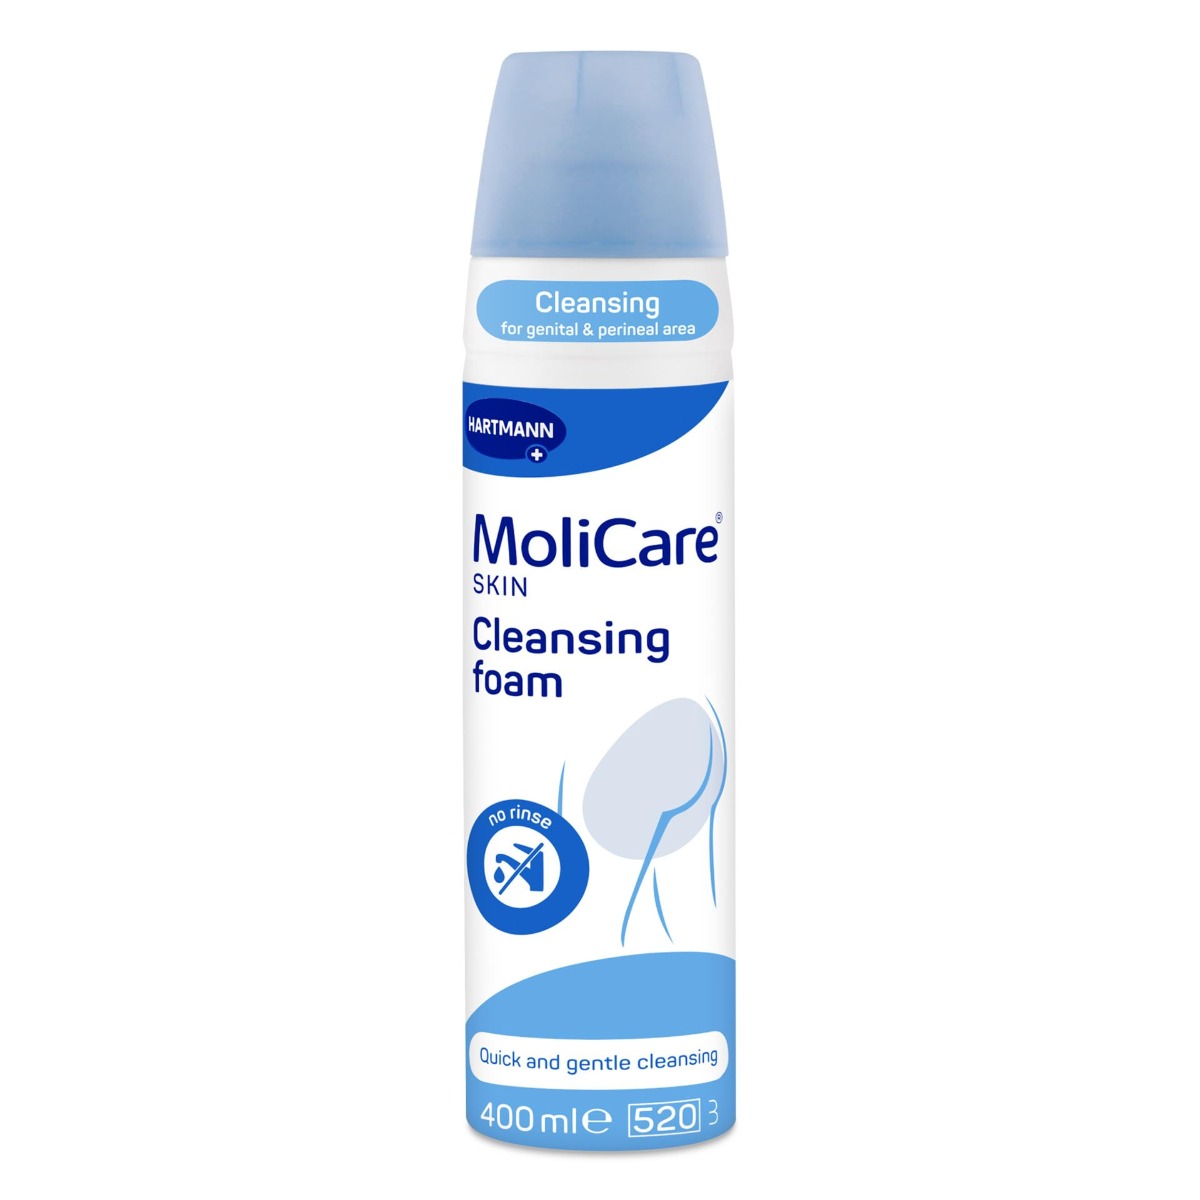 MoliCare Skin Cleansing Foam 400ml - Each